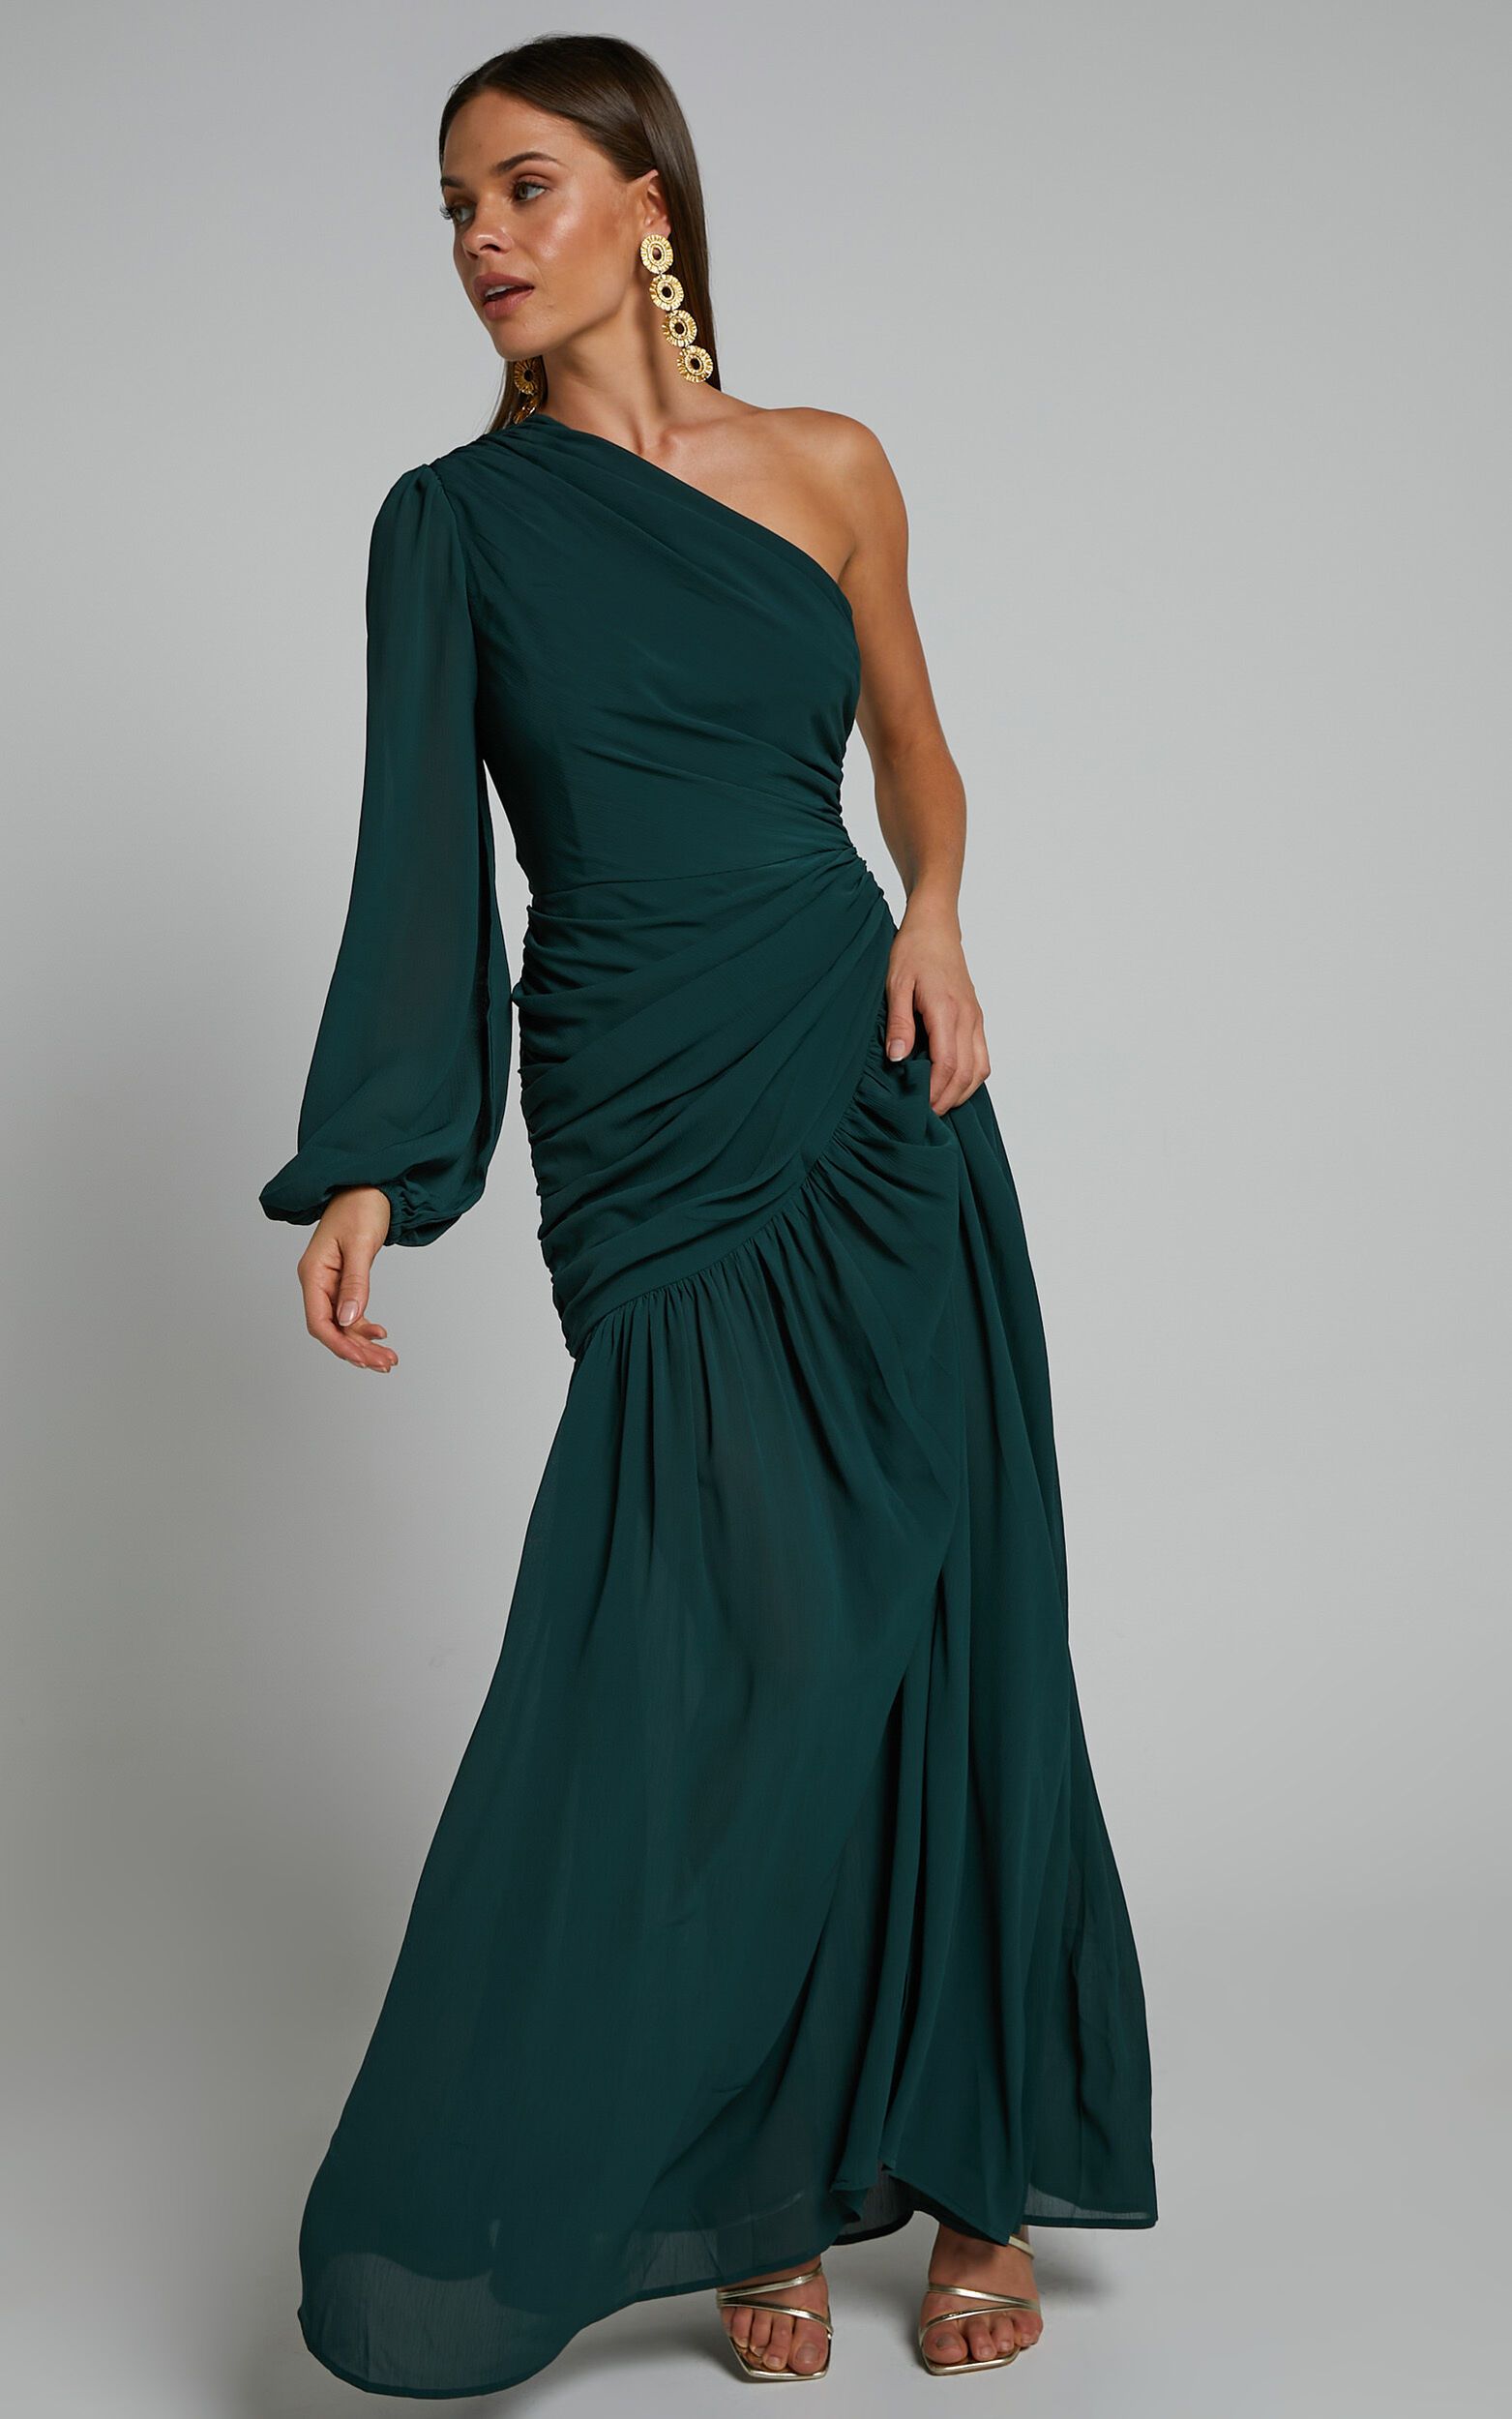 Grittah Midi Dress - One Shoulder Bishop Sleeve High Split Ruched Dress in Emerald | Showpo (US, UK & Europe)